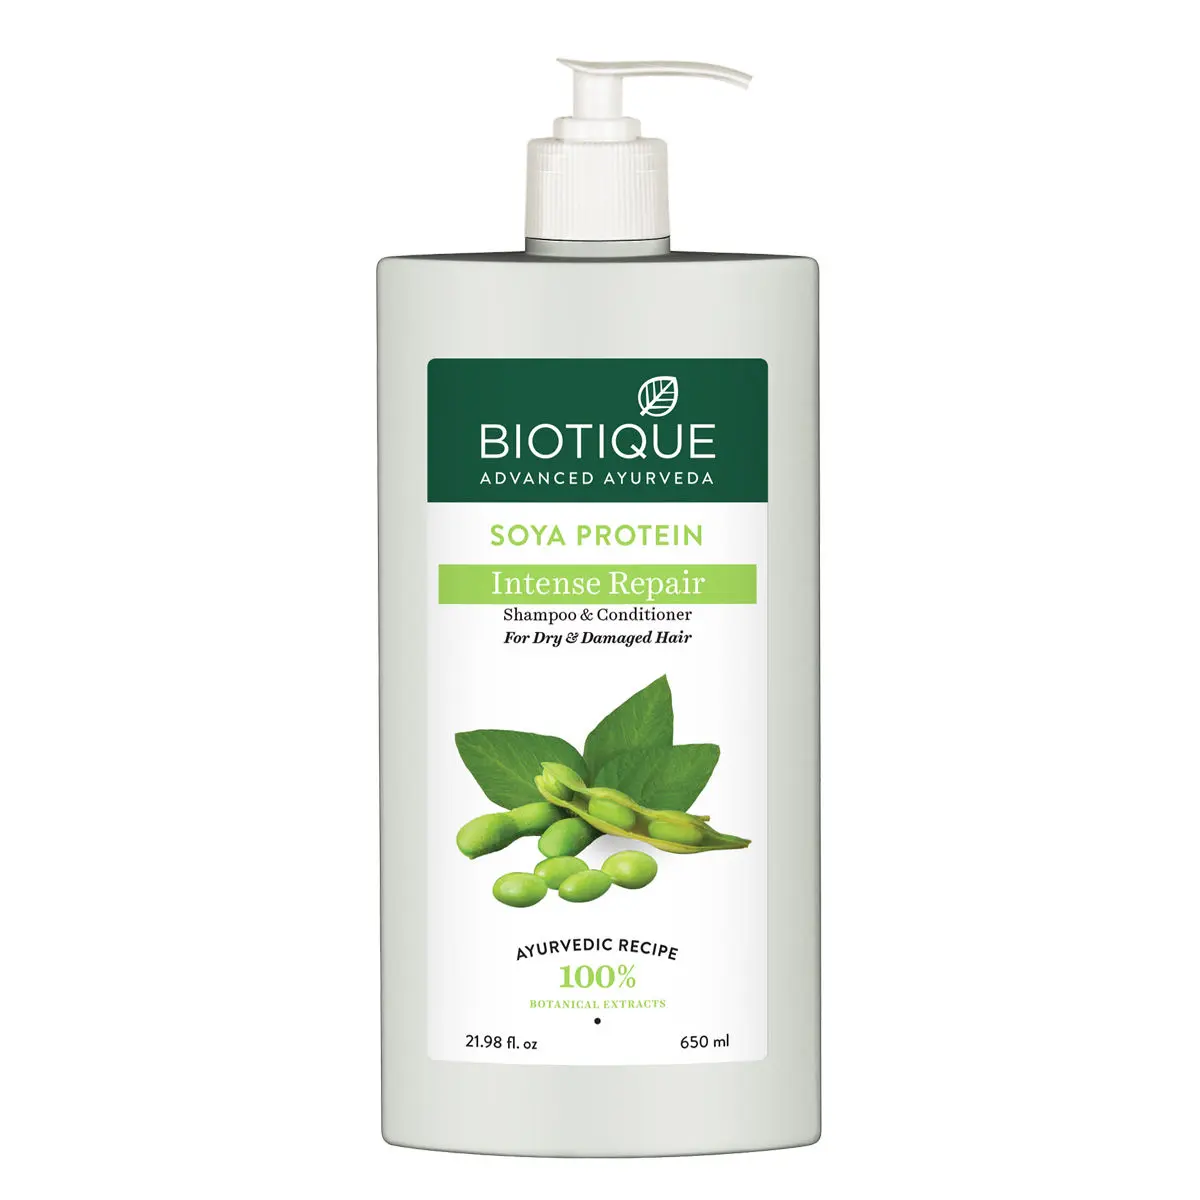 Biotique Soya Protein Intense Repair Shampoo & Conditioner (650 ml)